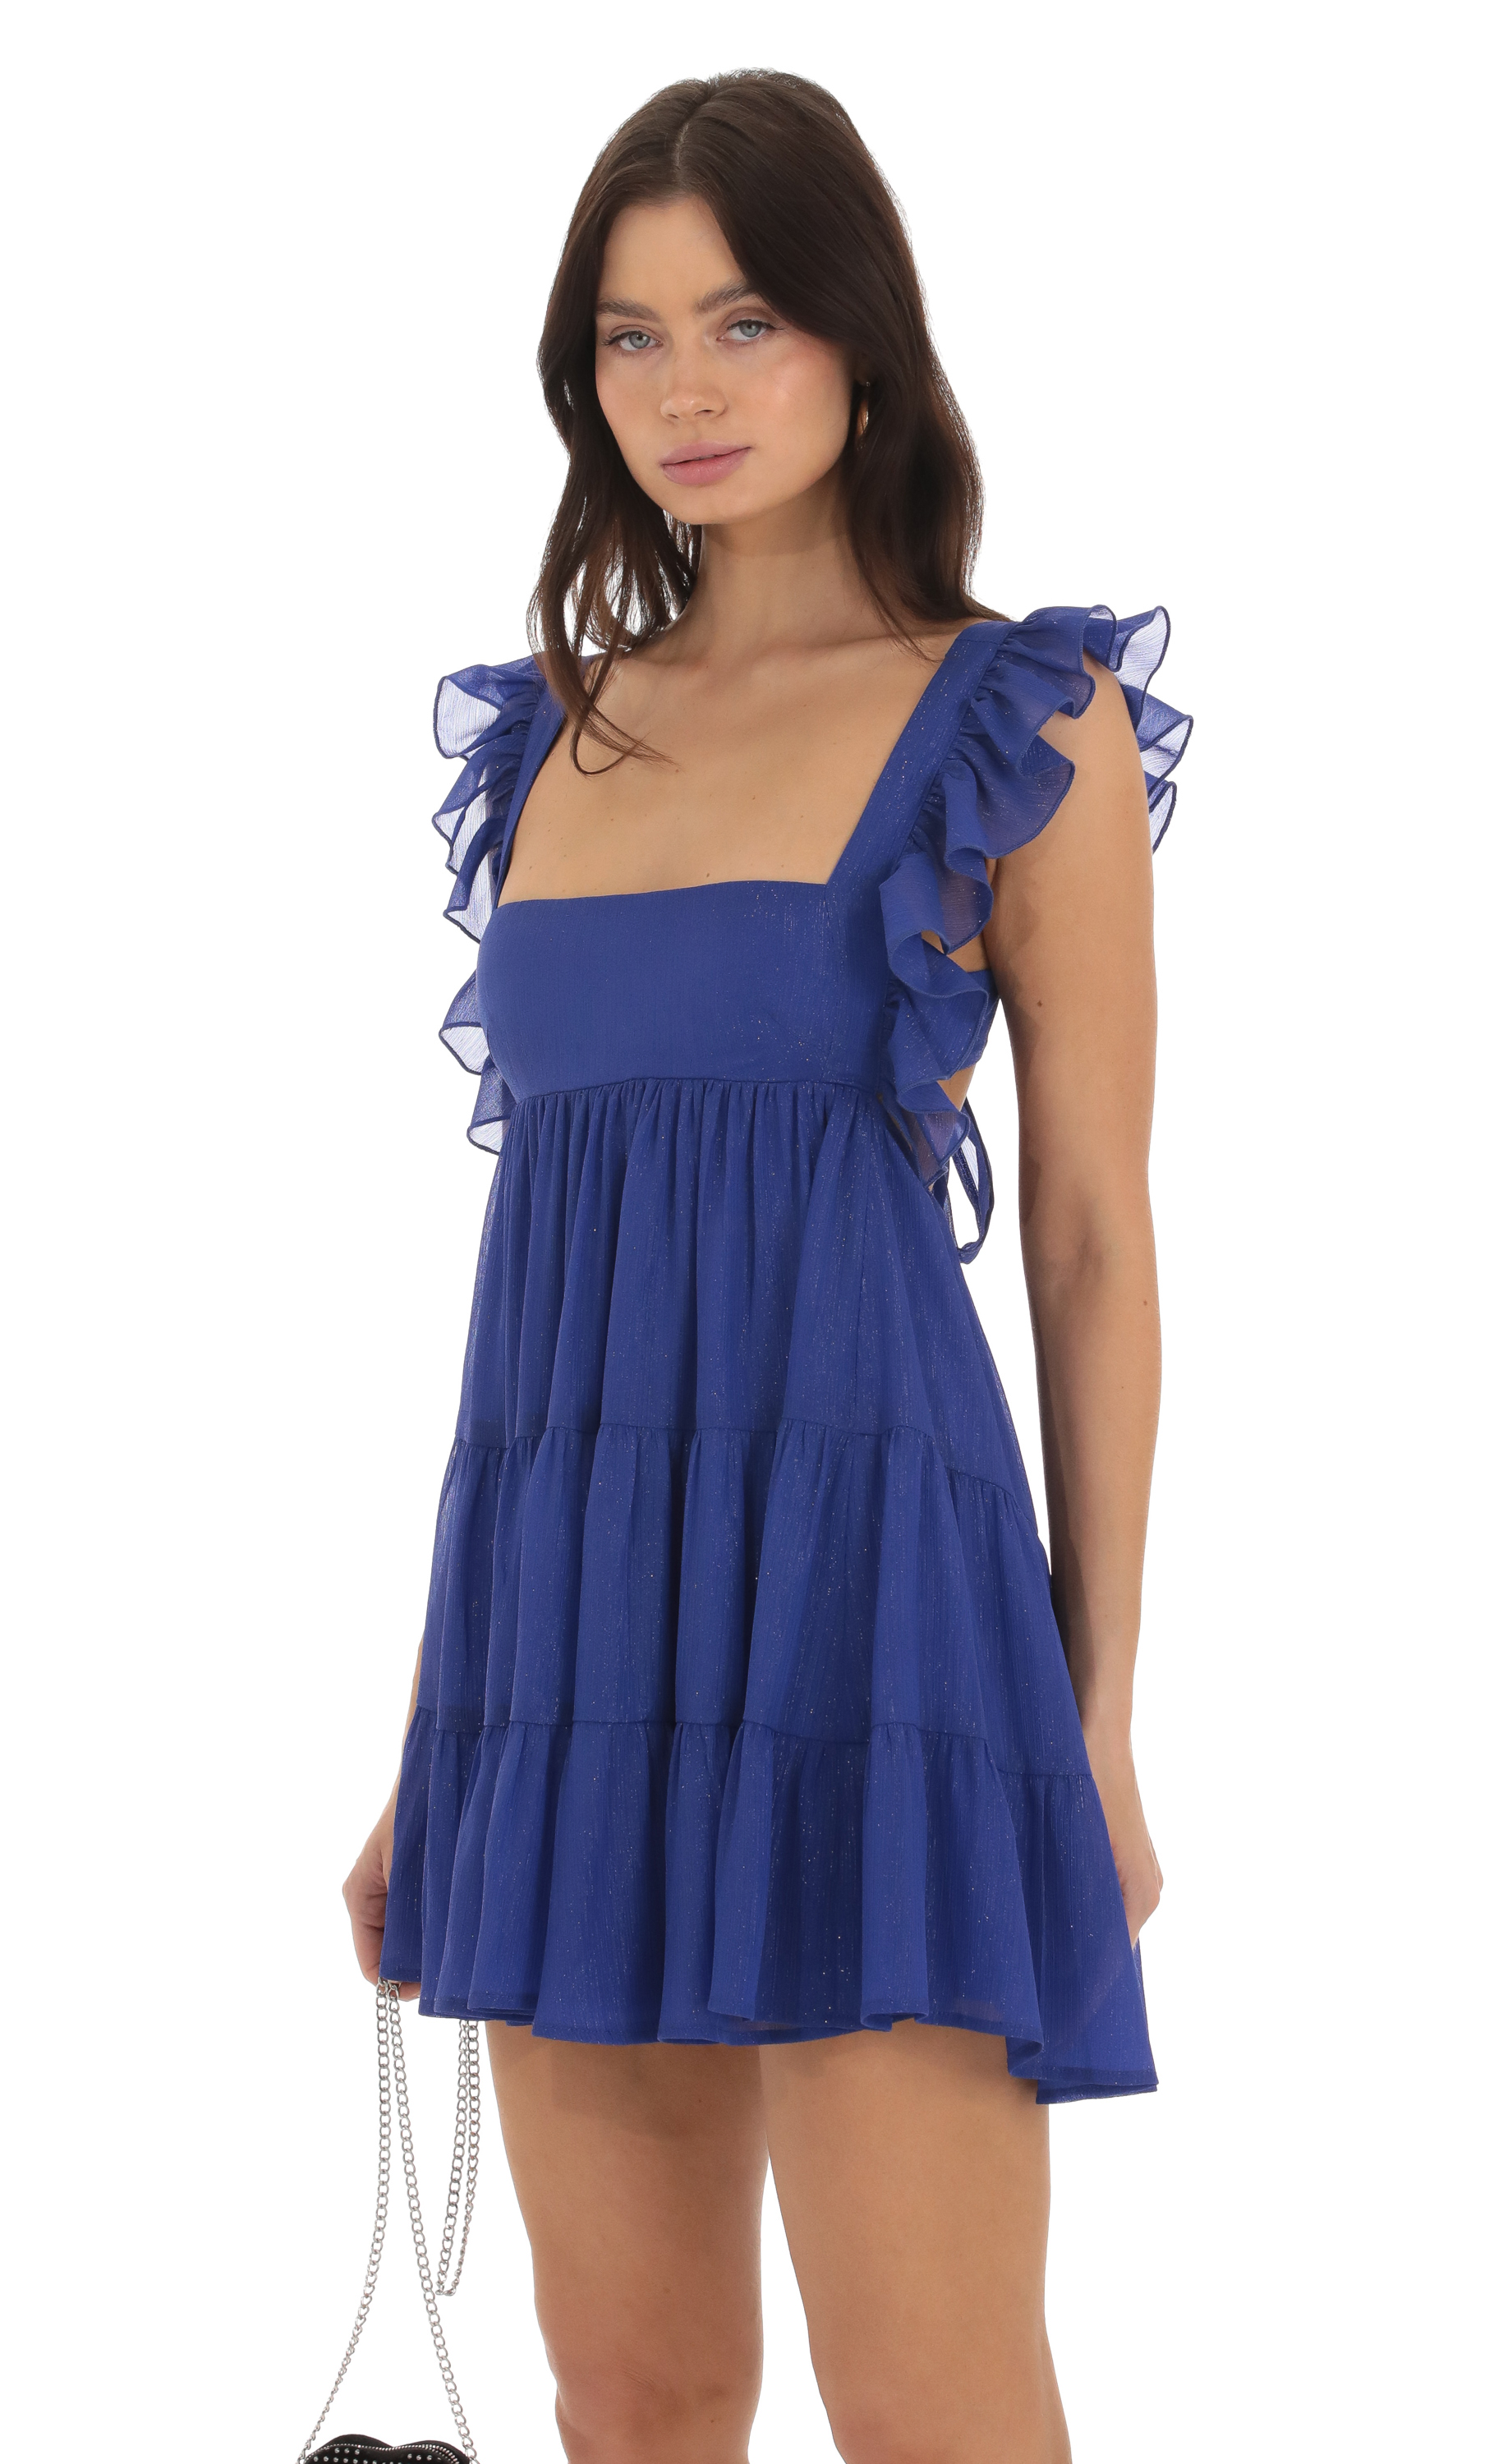 Gisela Shimmer Baby Doll Ruffle Dress in Blue